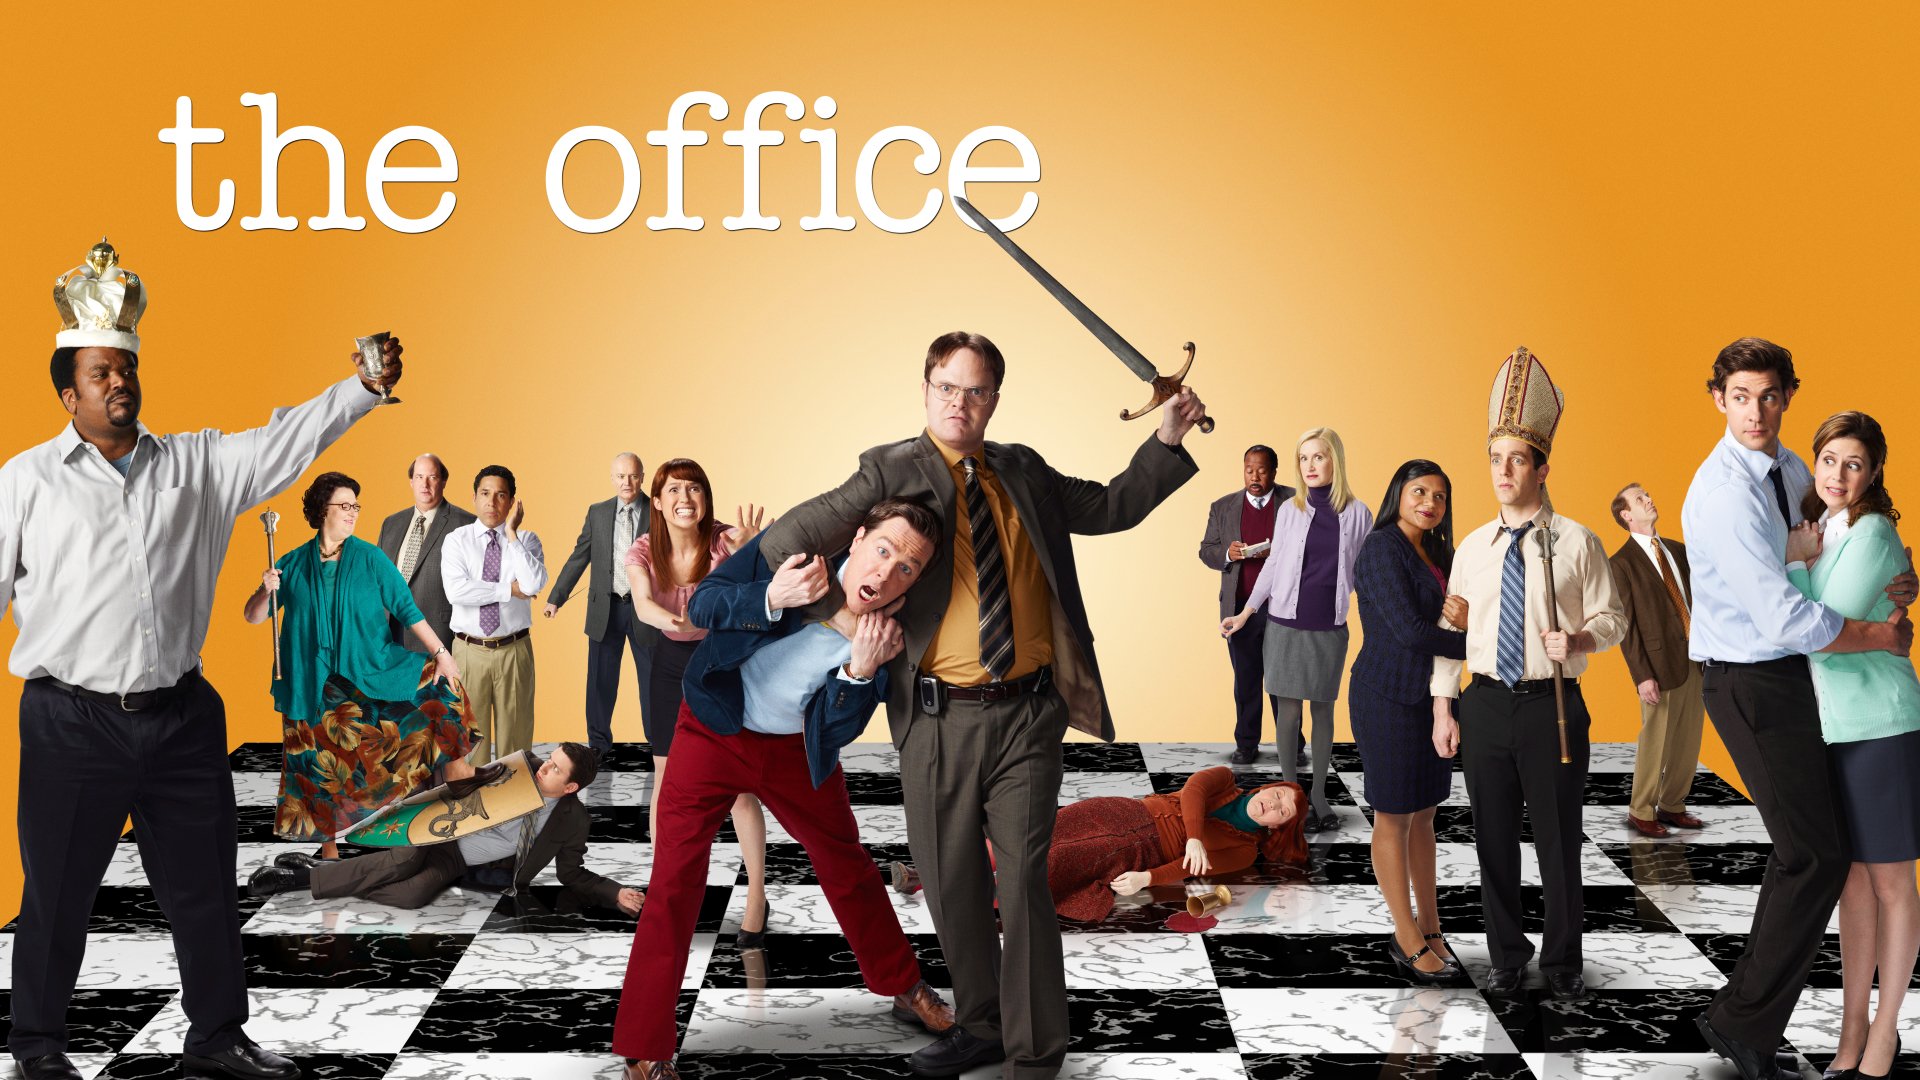 Watch The Office (US) Season 9 Episode 22 Online - Stream Full Episodes